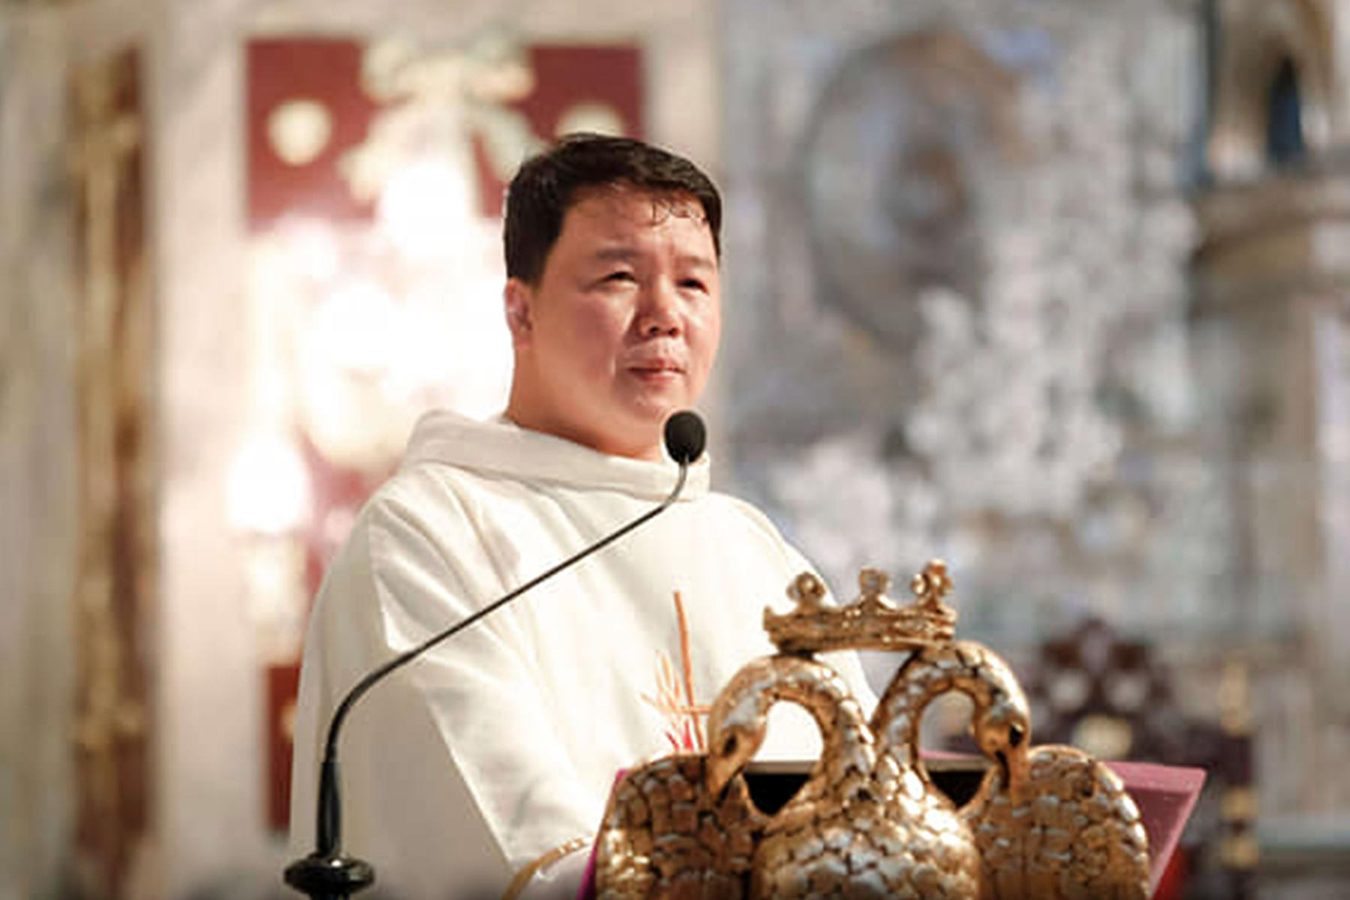 San Agustin parish priest dies of COVID-19; more churchmen test positive